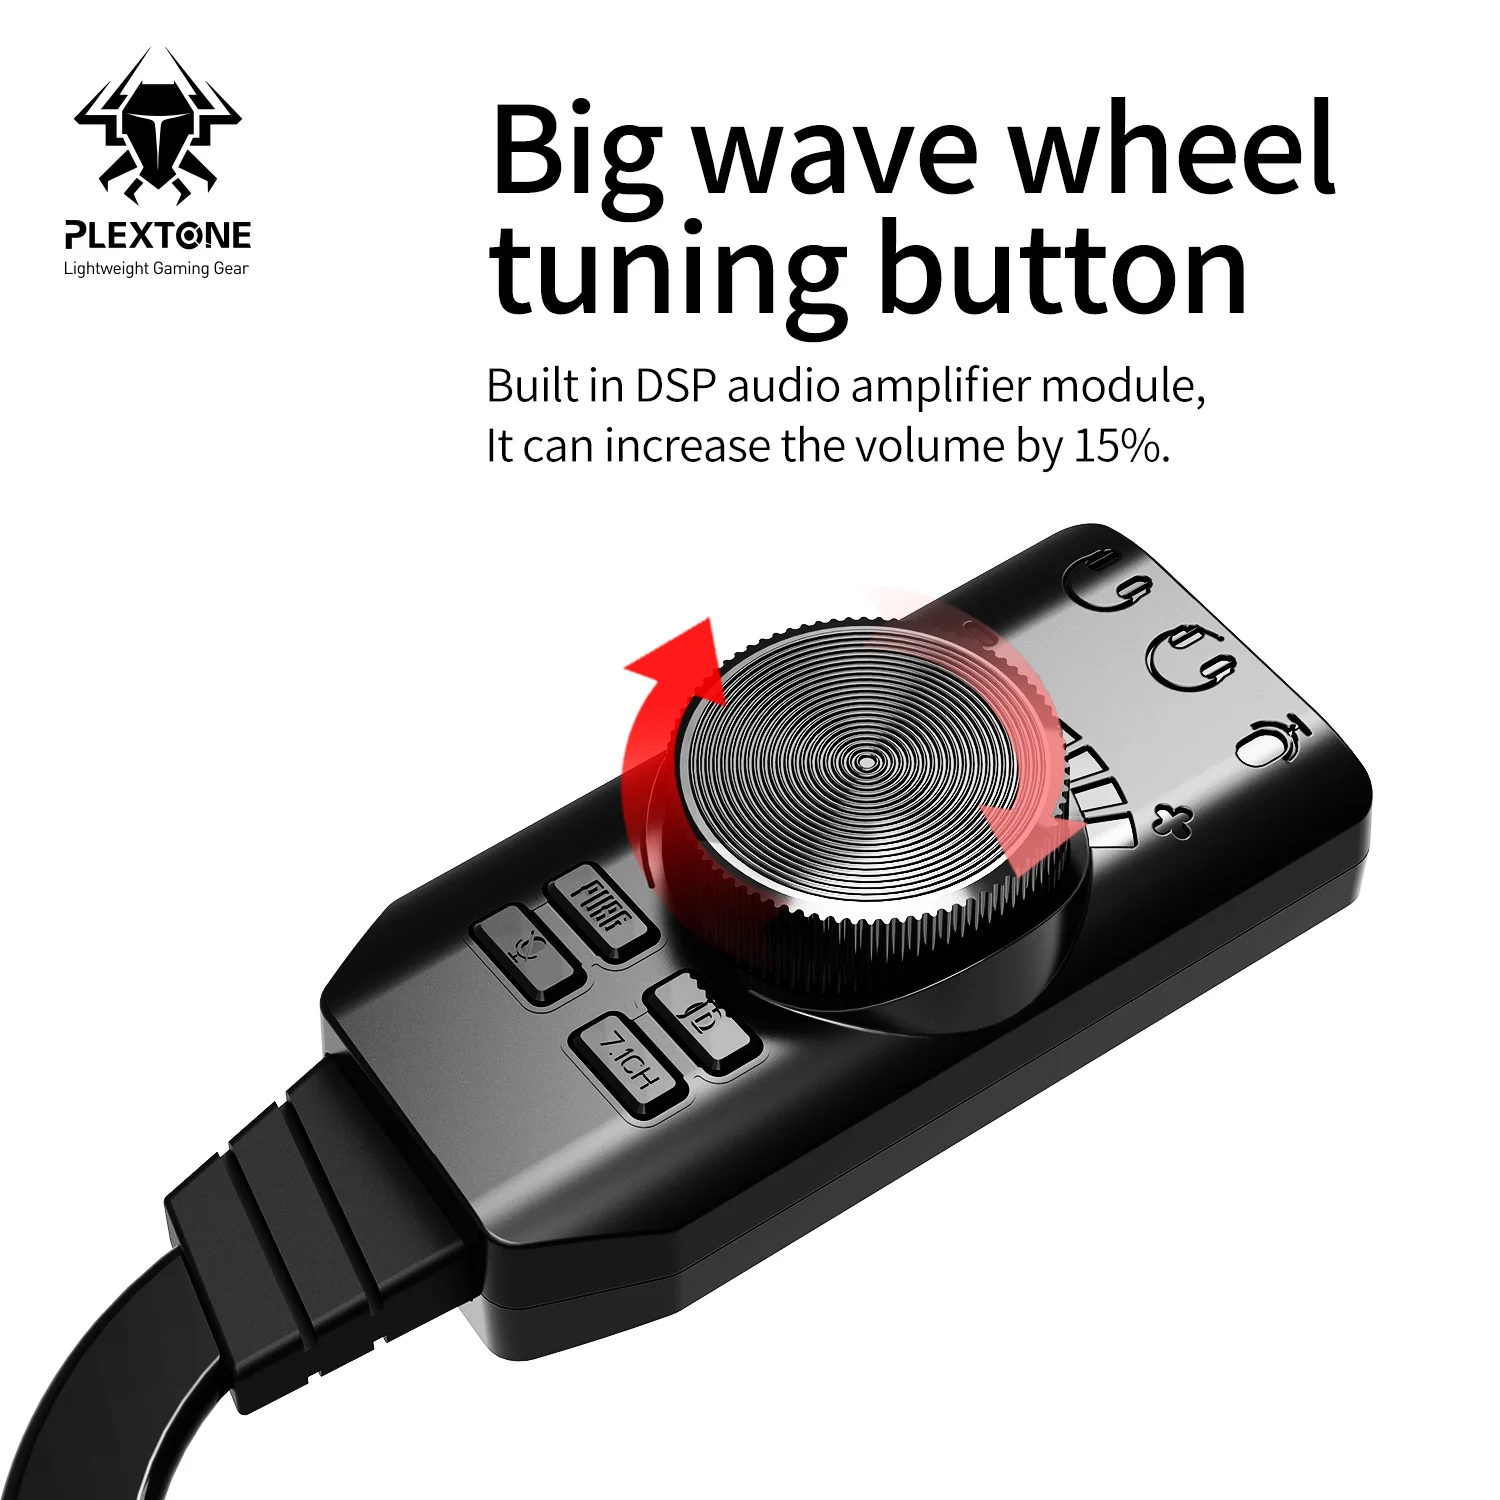 Plextone Usb Sound Card Virtual 7 1ch Sound Card Usb Audio Sound Card Gs3 Buy Usb Audio Sound Card Gs3 Plextone Usb Sound Card Virtual 7 1ch Sound Card Product On Alibaba Com